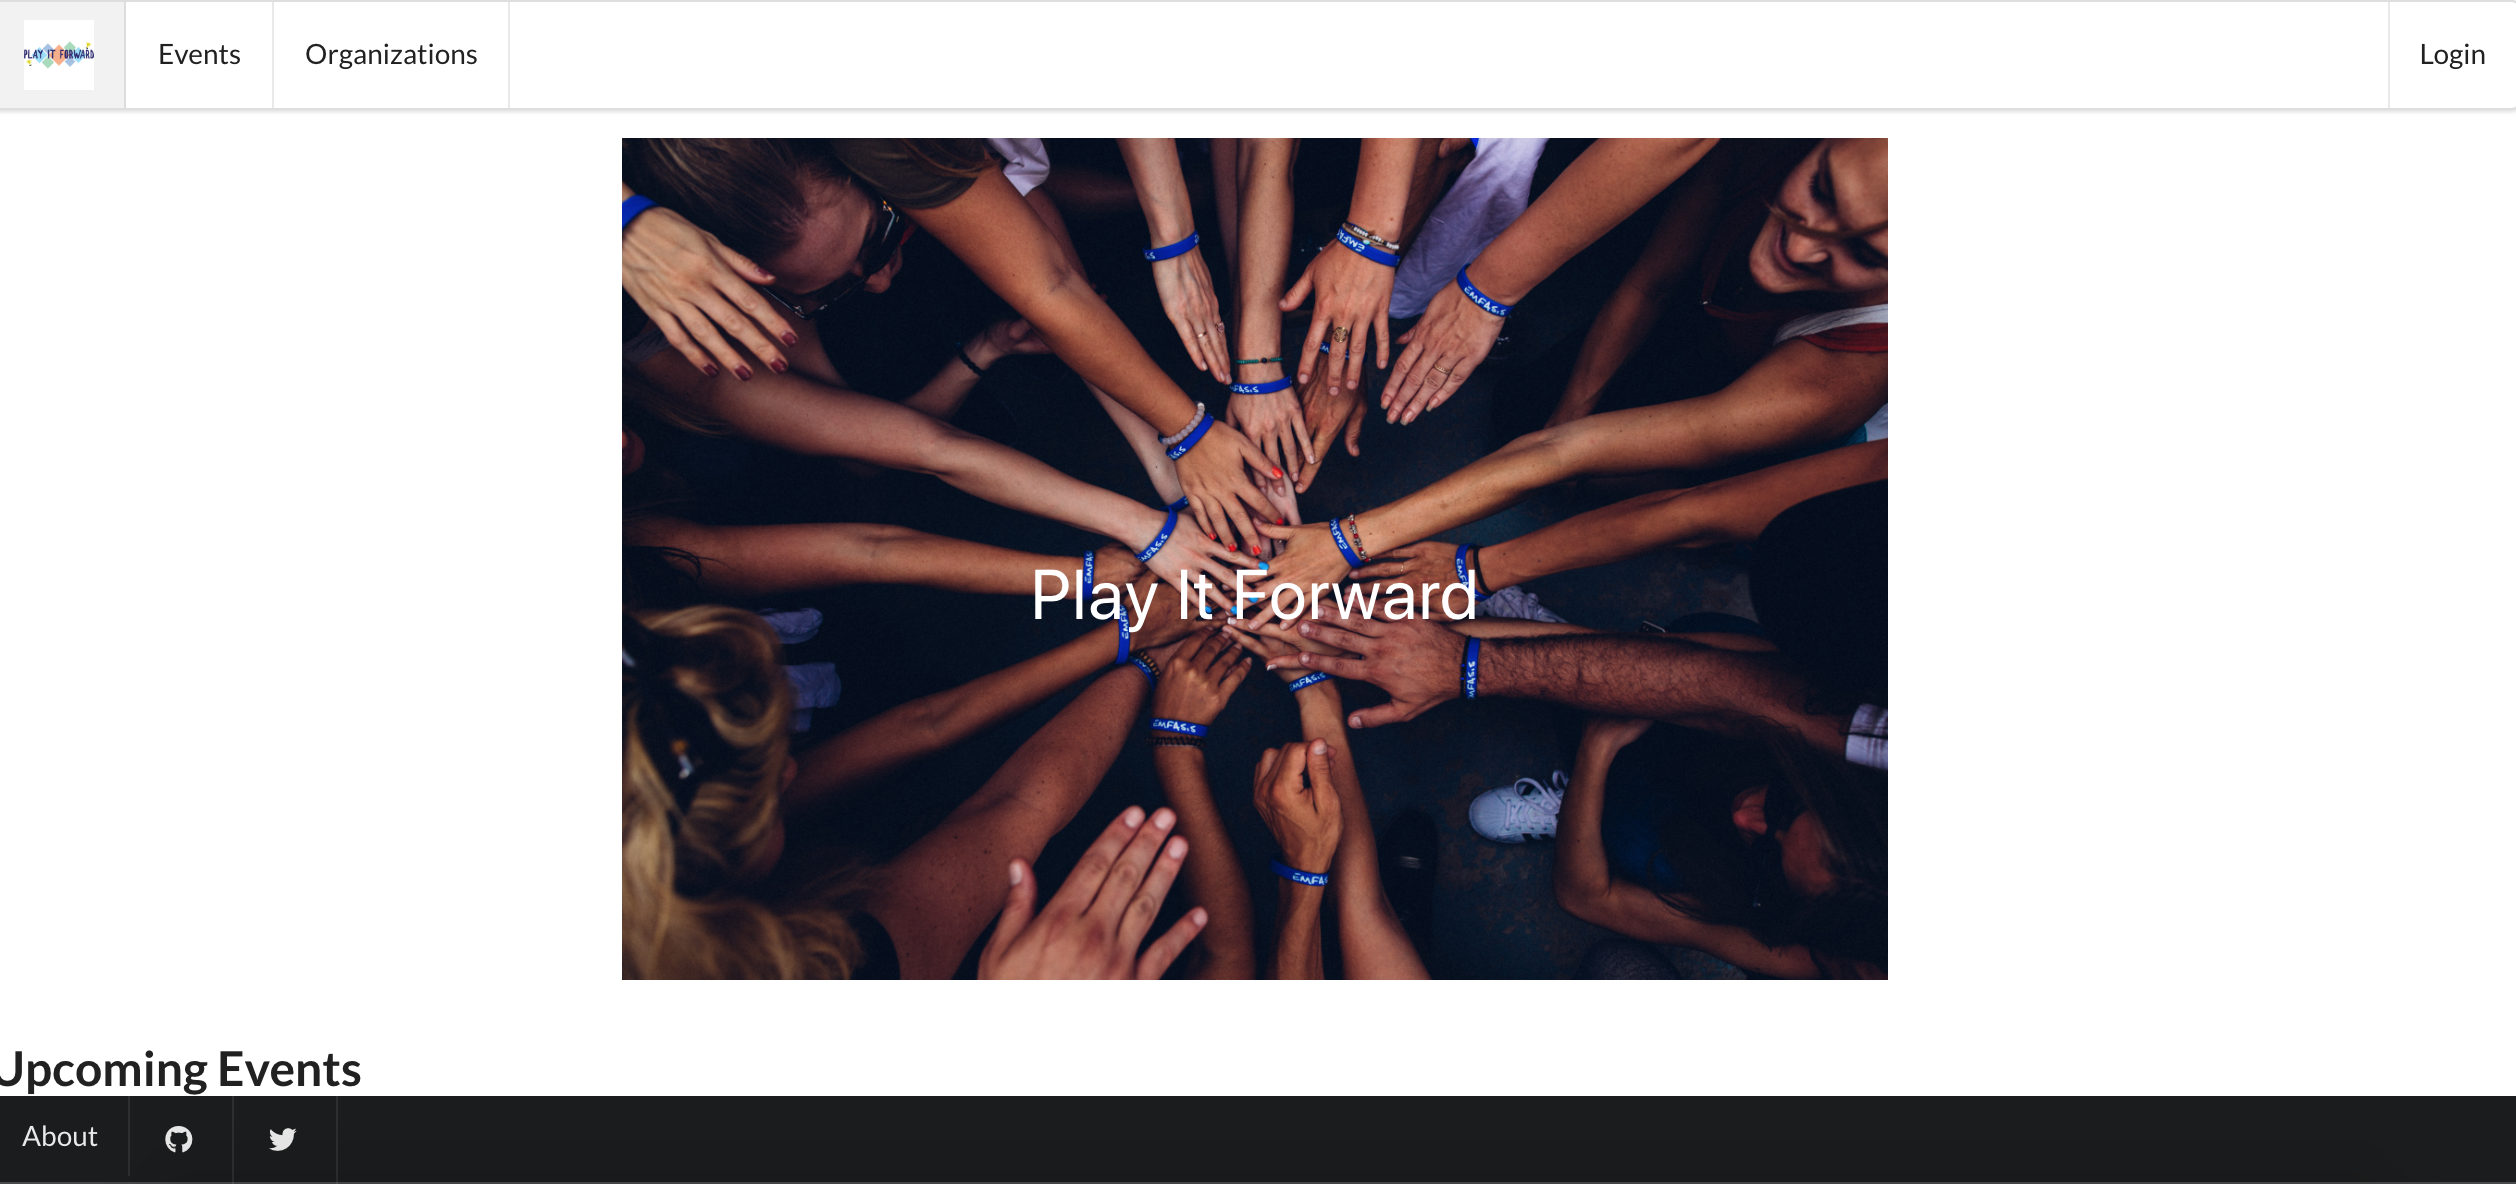 My Mod 4 PlayItForward homepage with banner image, nav bar, and footer